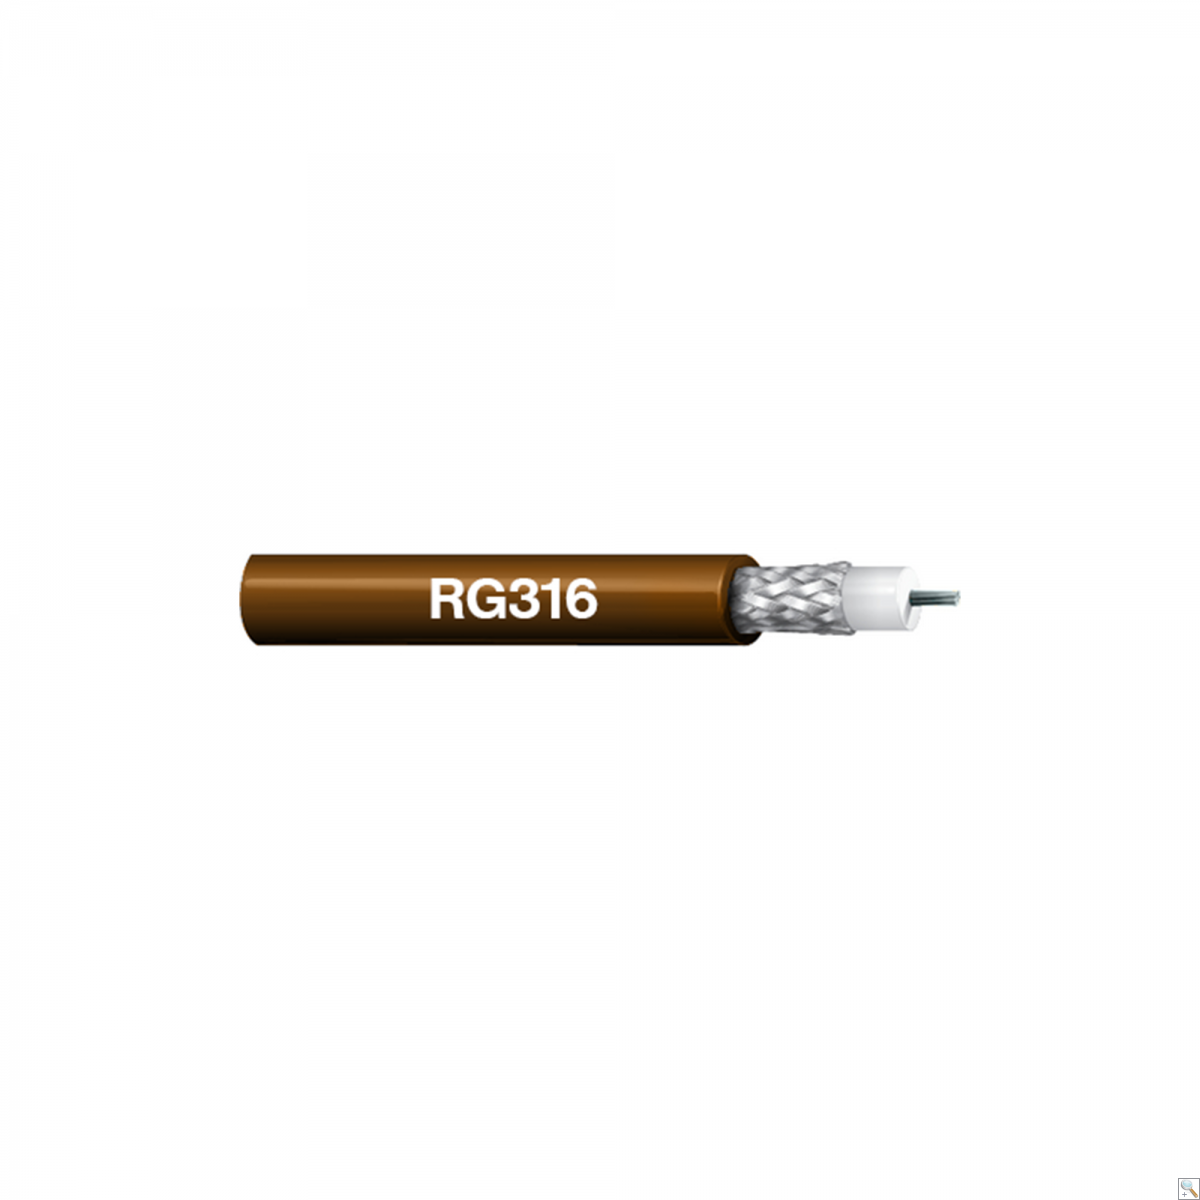 RG316 - Cut Lengths